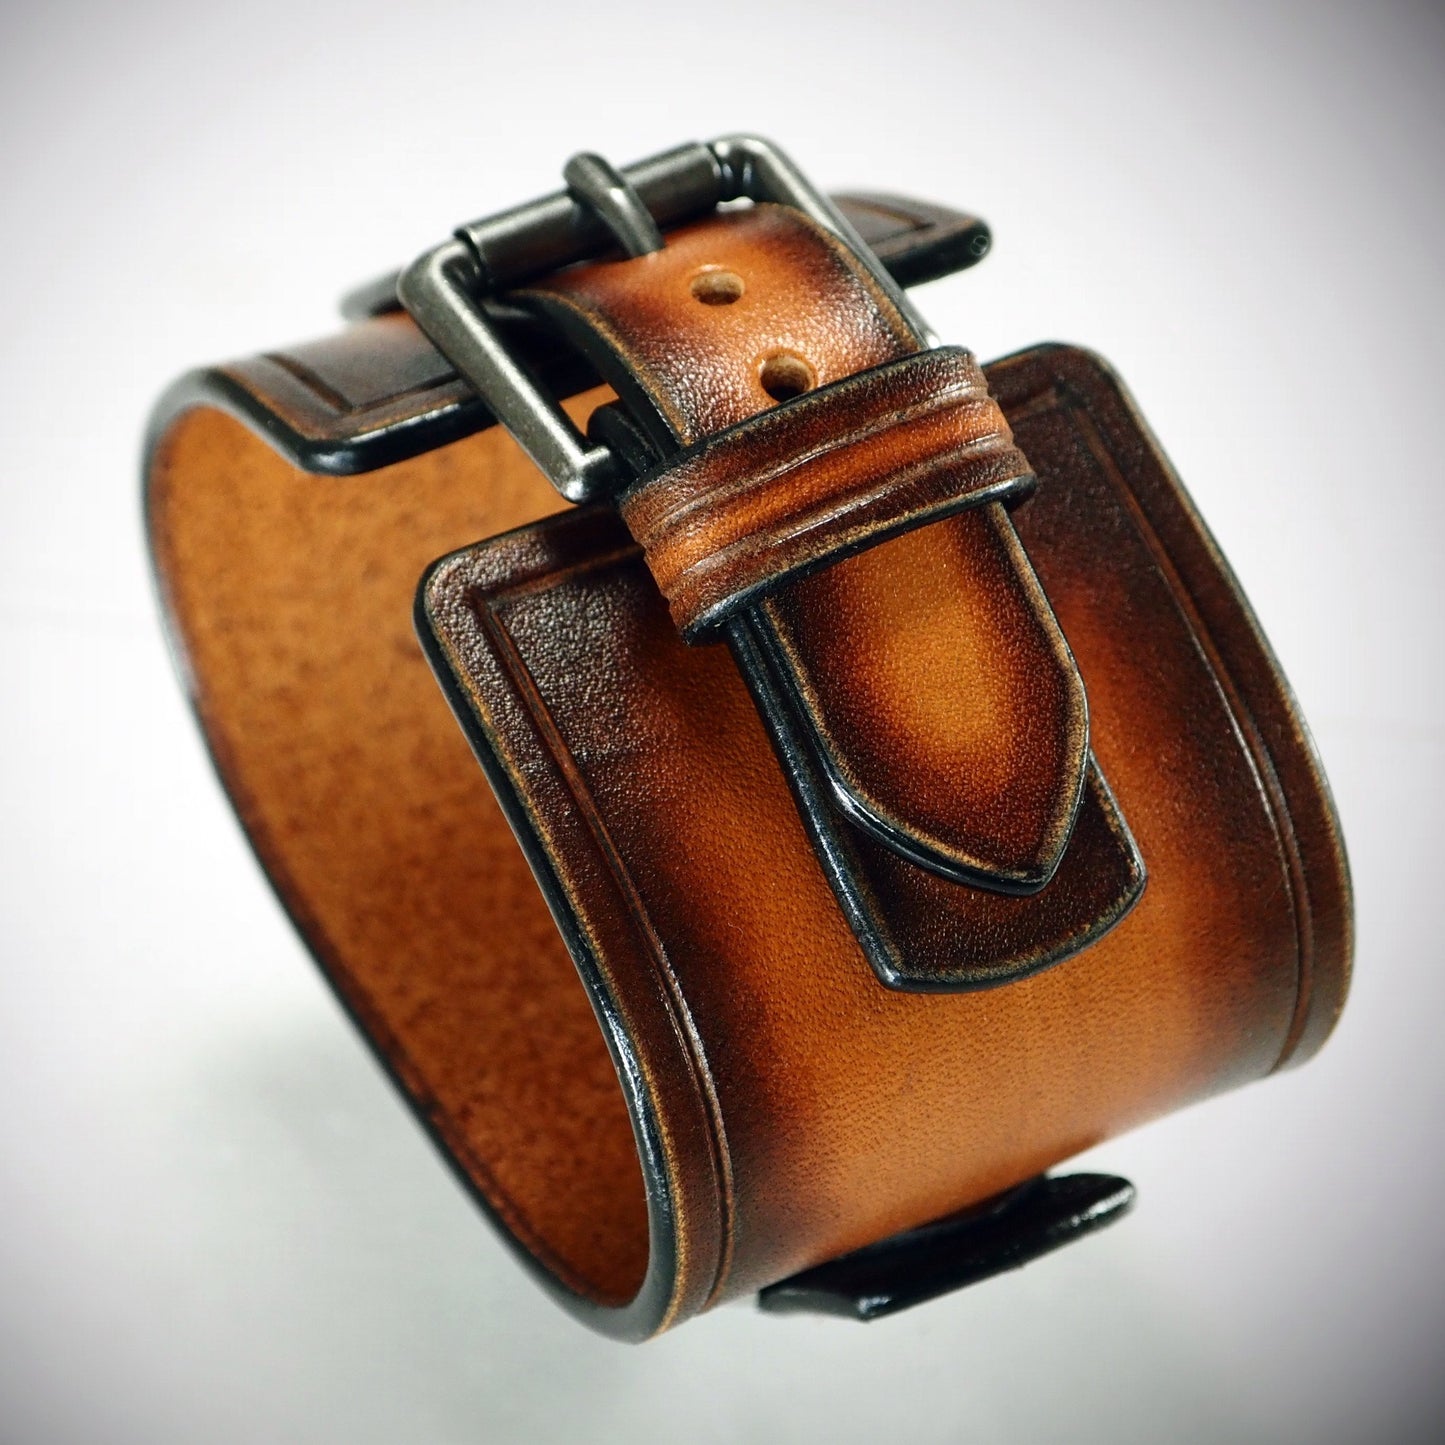 Sunburst Leather cuff watch : Refined American craft